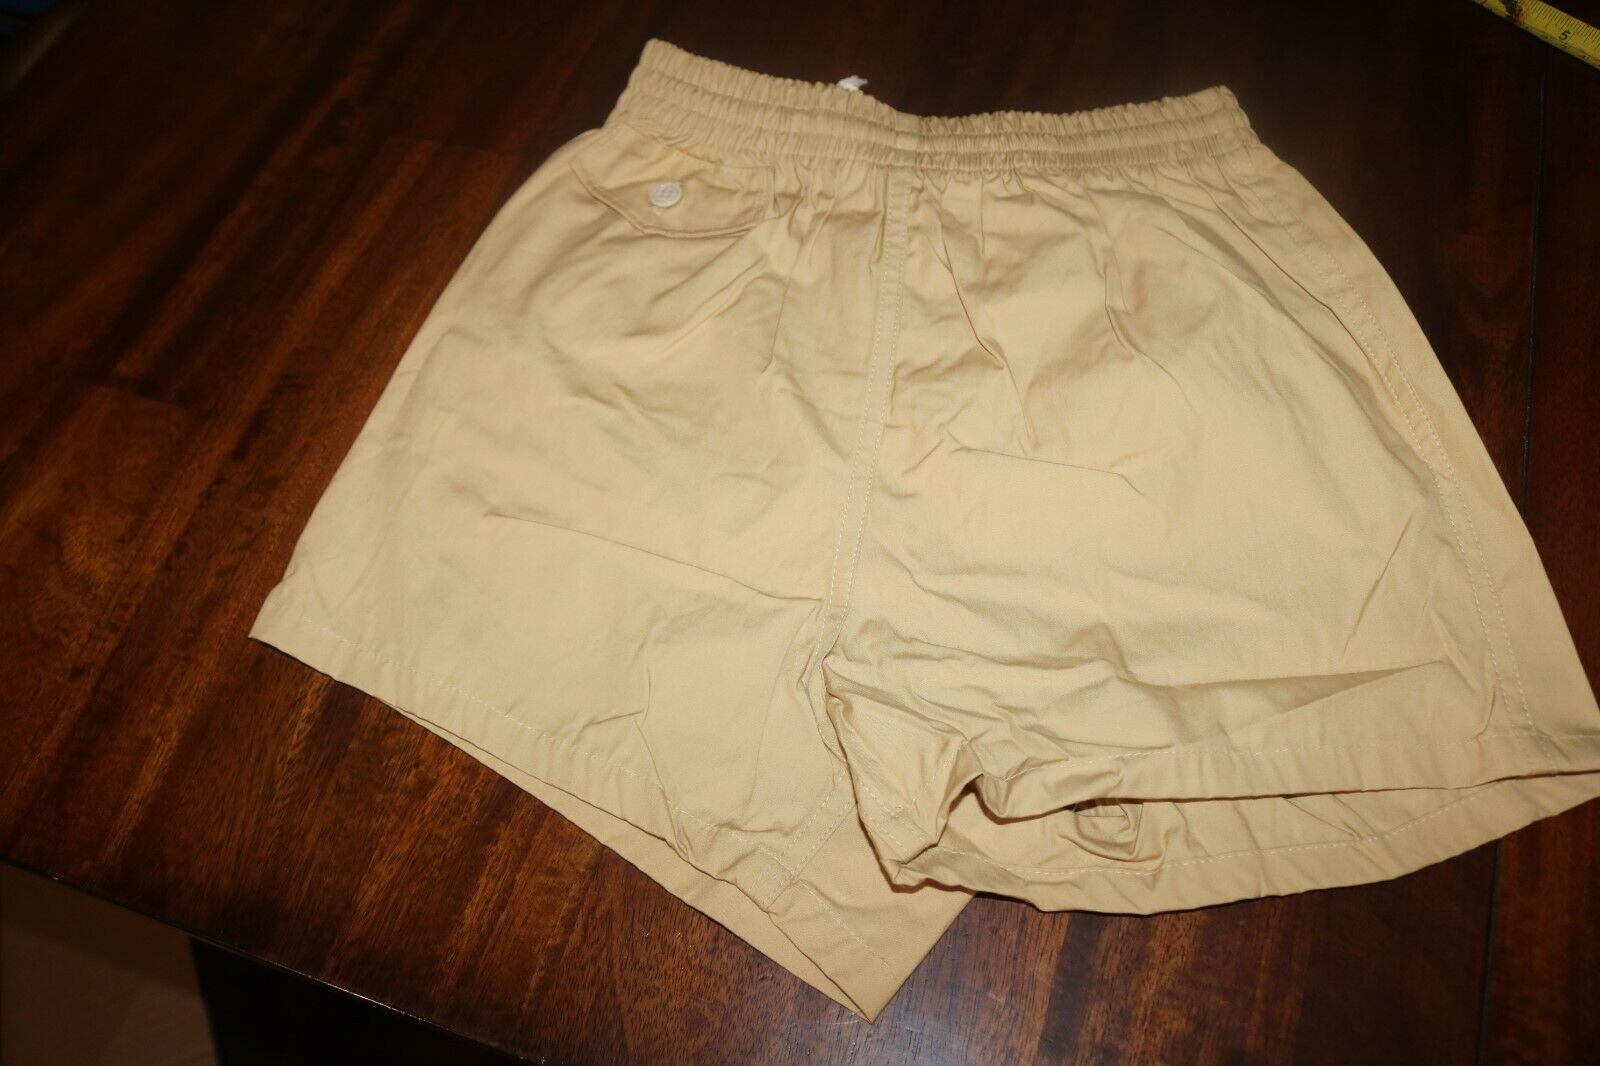 NOS US Navy khaki general purpose trunks shorts PT SEALS 1970s 80s sz Small